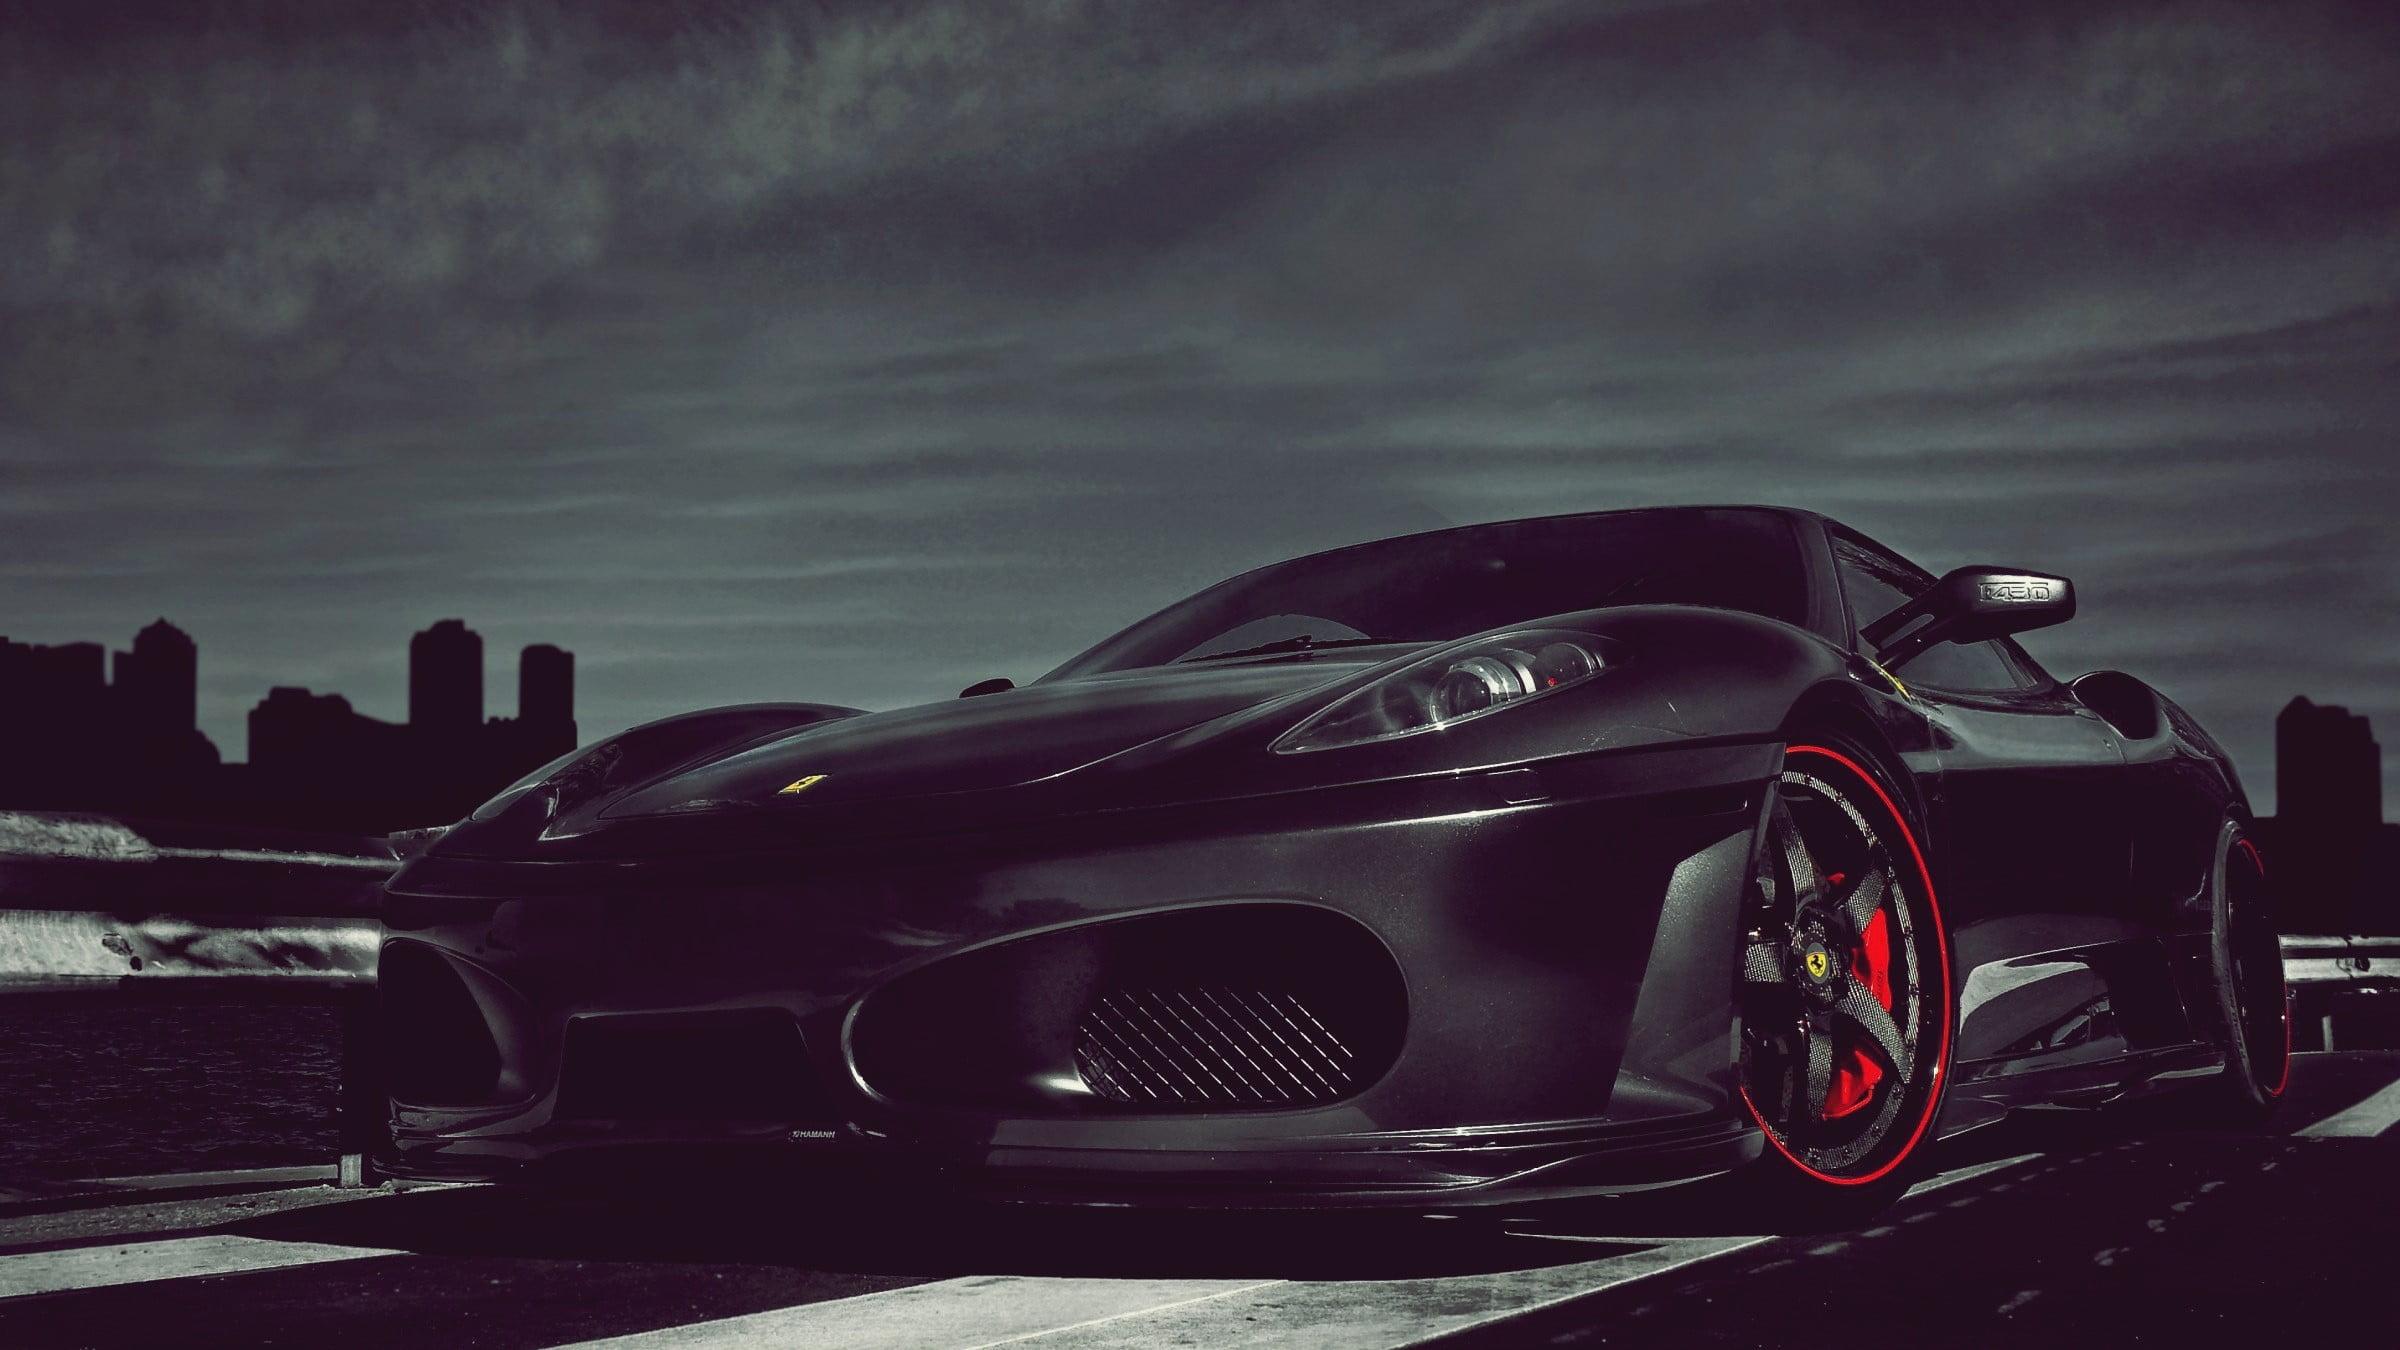 black coupe, Ferrari 430, car, supercars, F430, mode of transportation